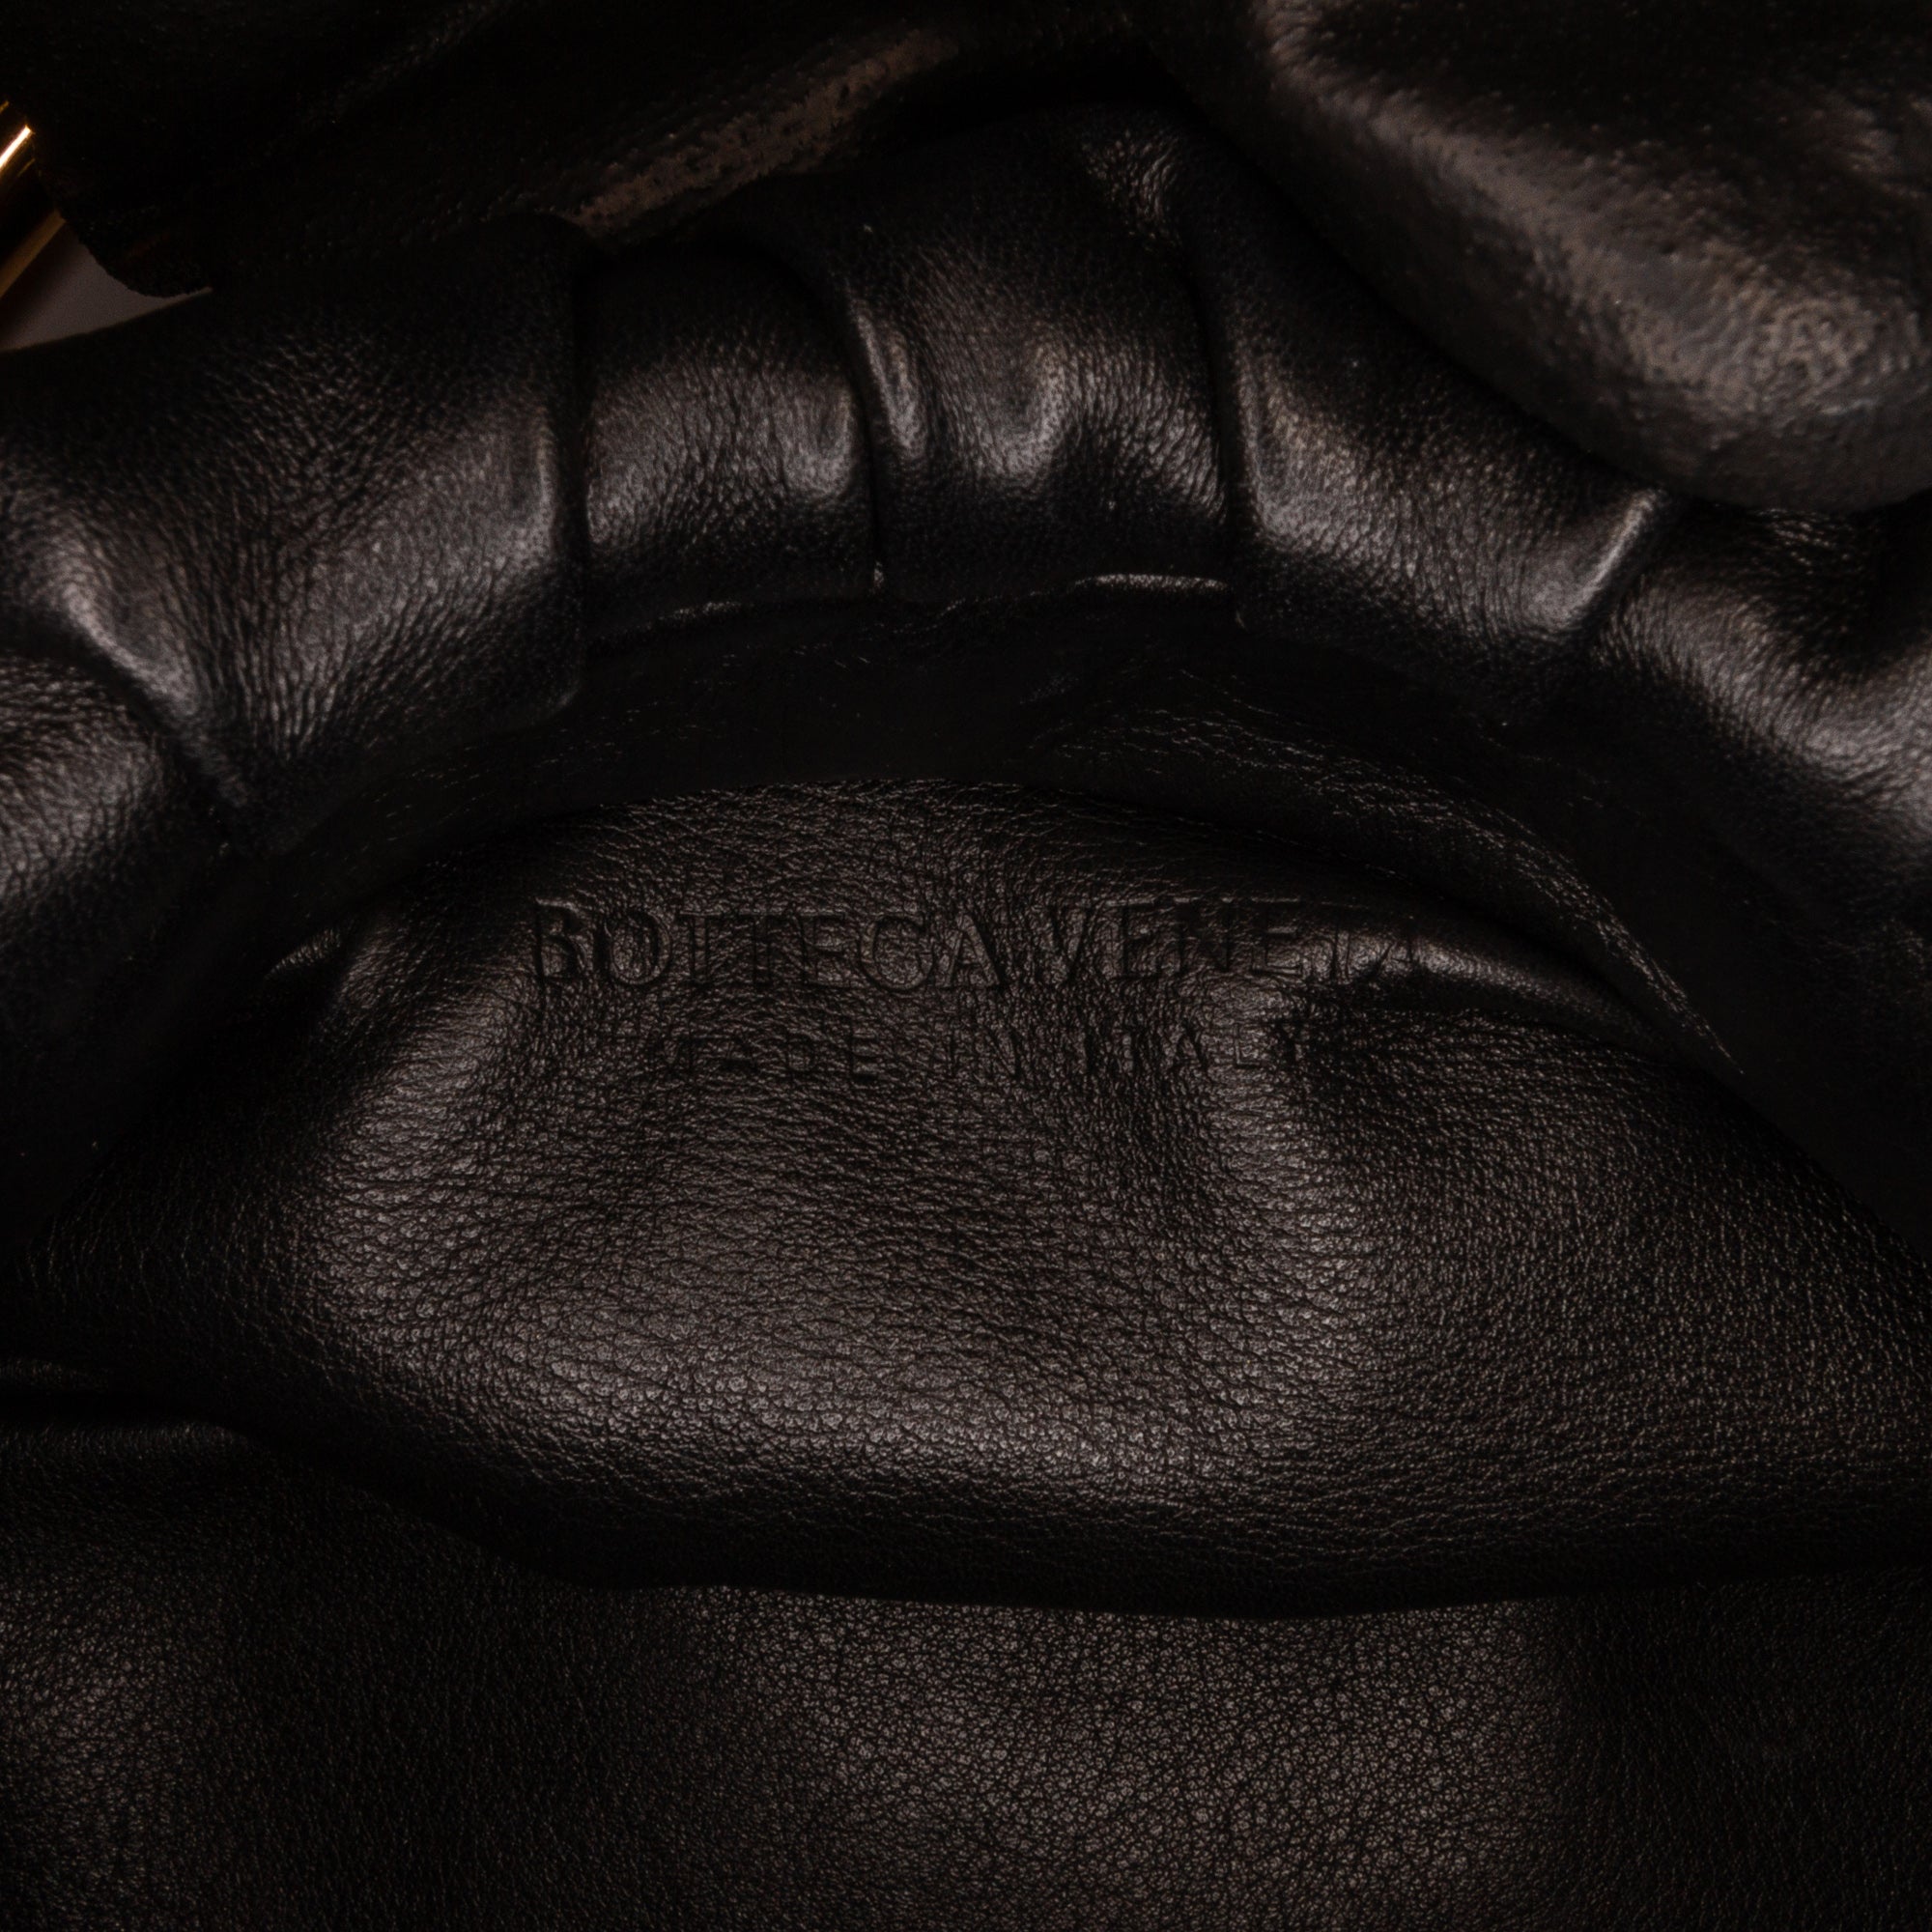 Chain pouch leather handbag Bottega Veneta Black in Leather - 20844651